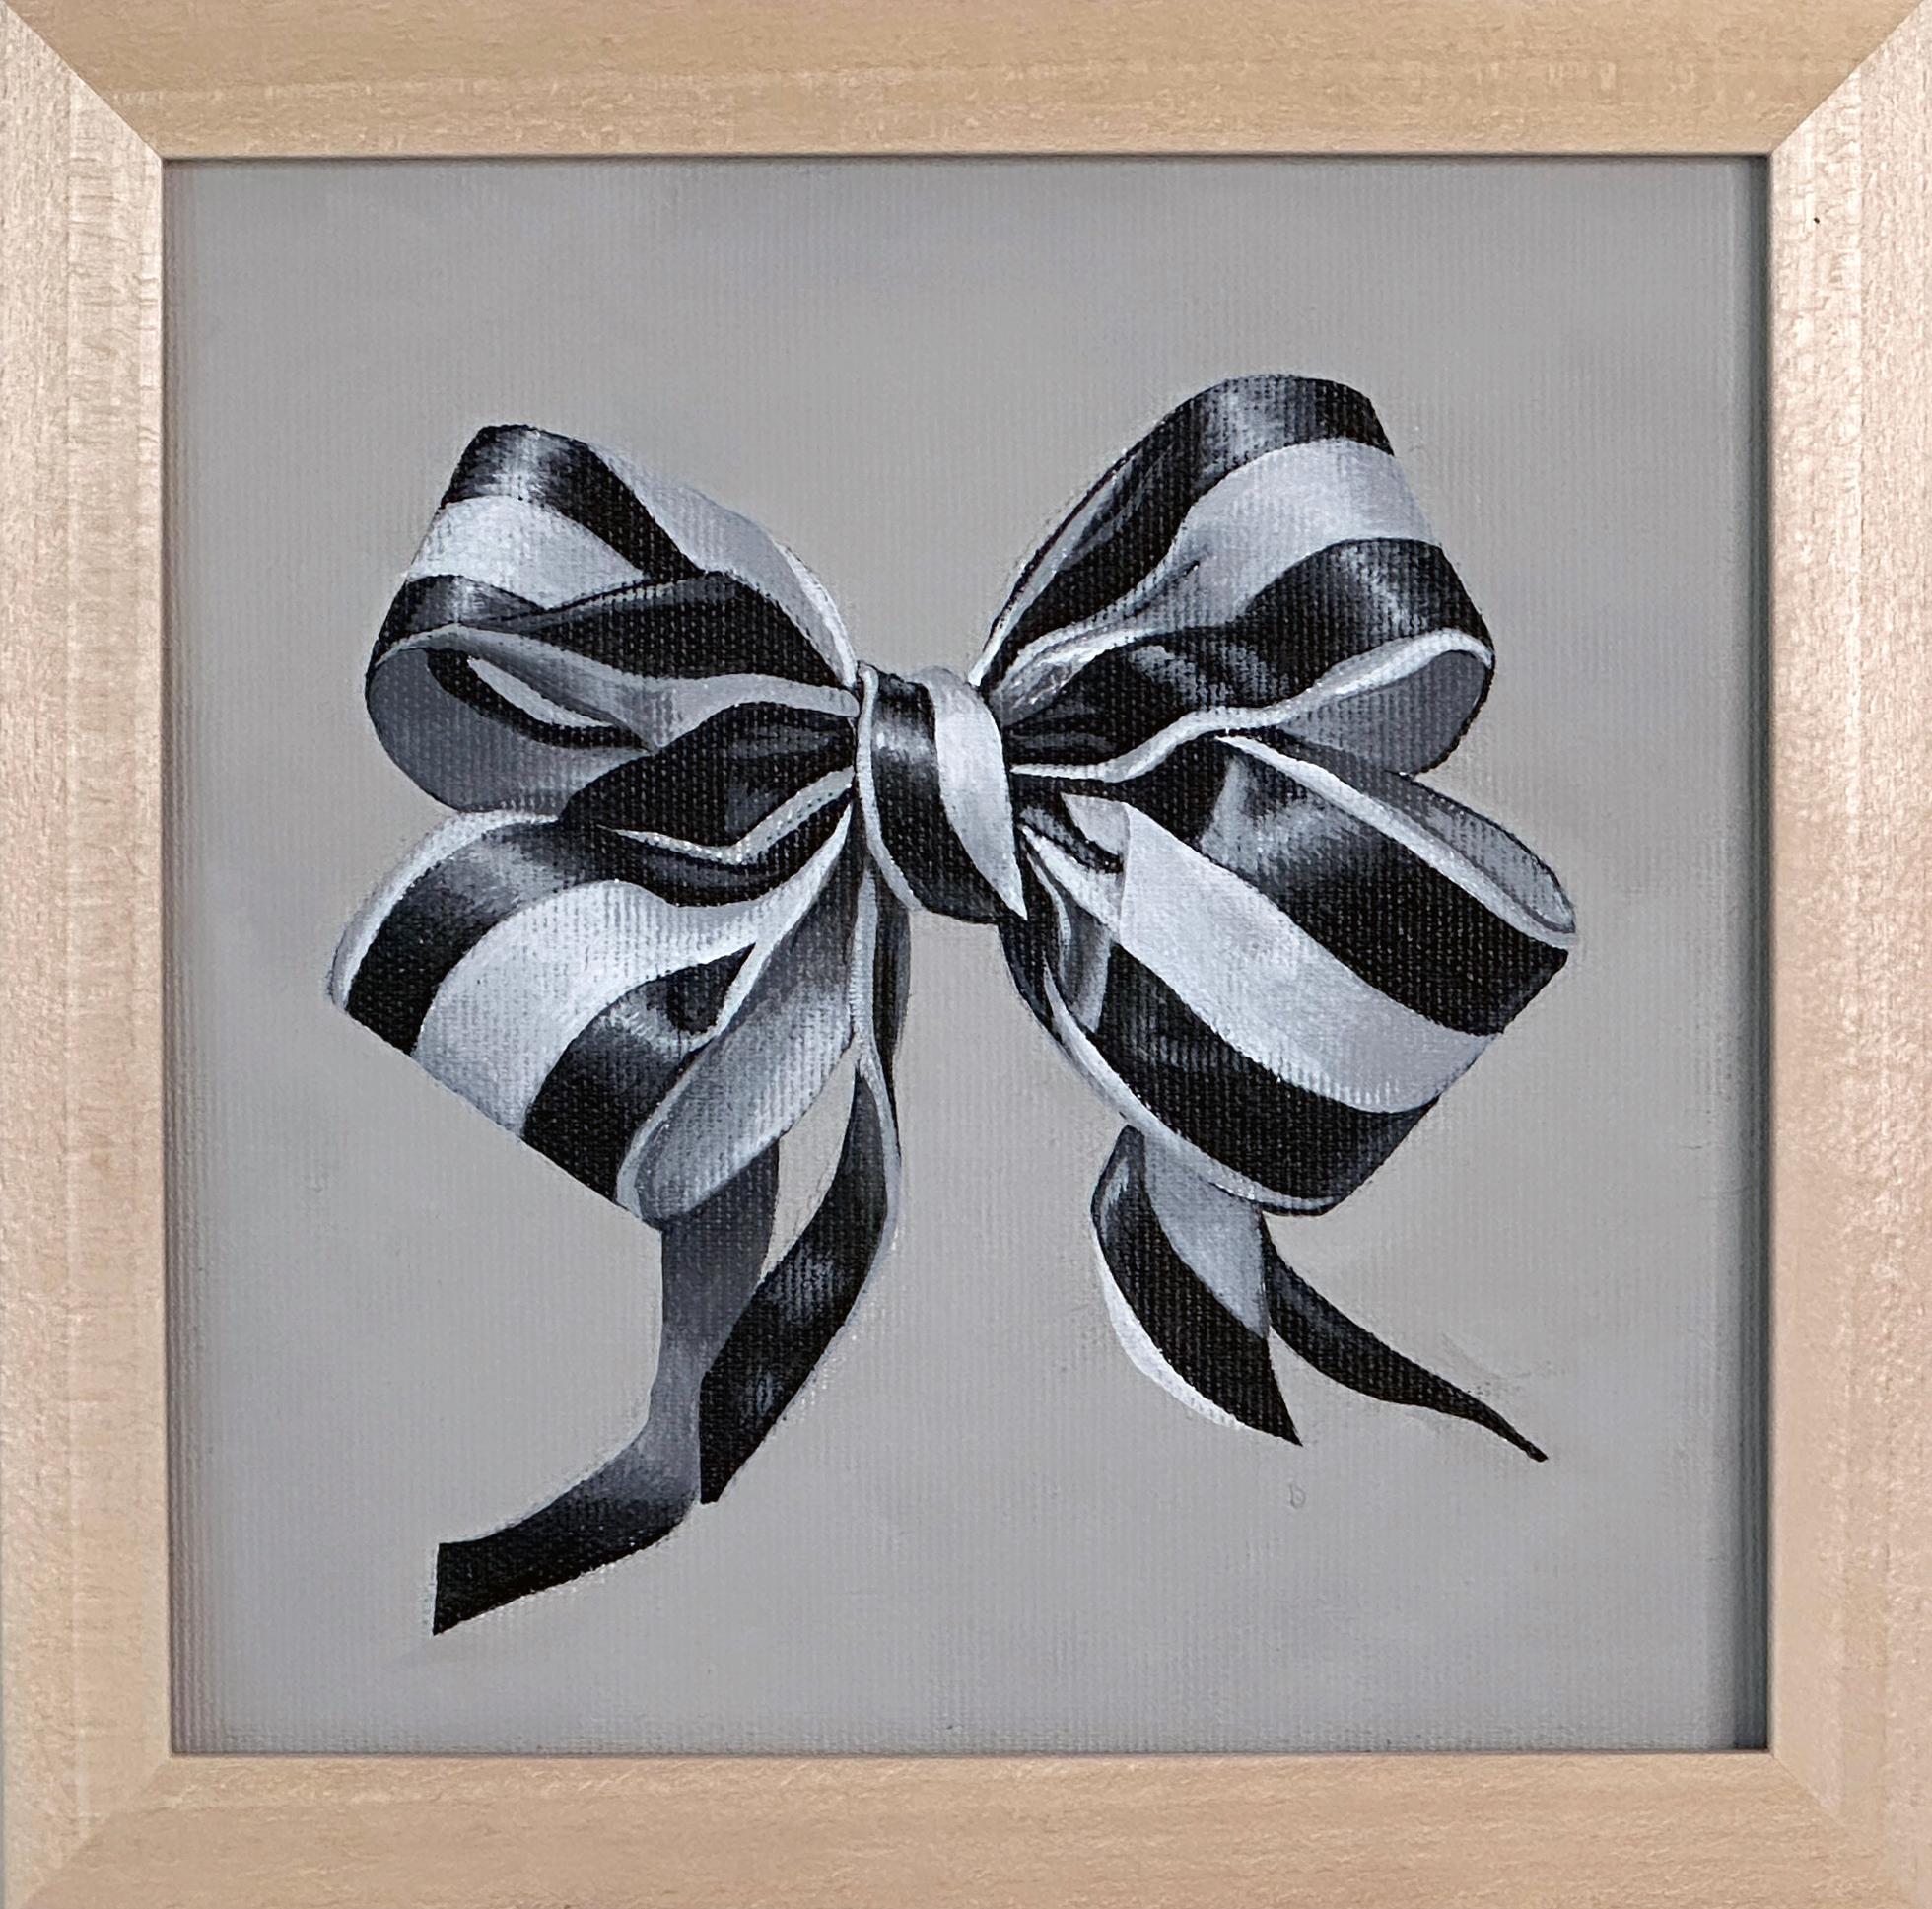 Abstract Painting Amanda Andersen - "Ruban ludique" Peinture acrylique avec cadre rayures noires et blanches minimales.